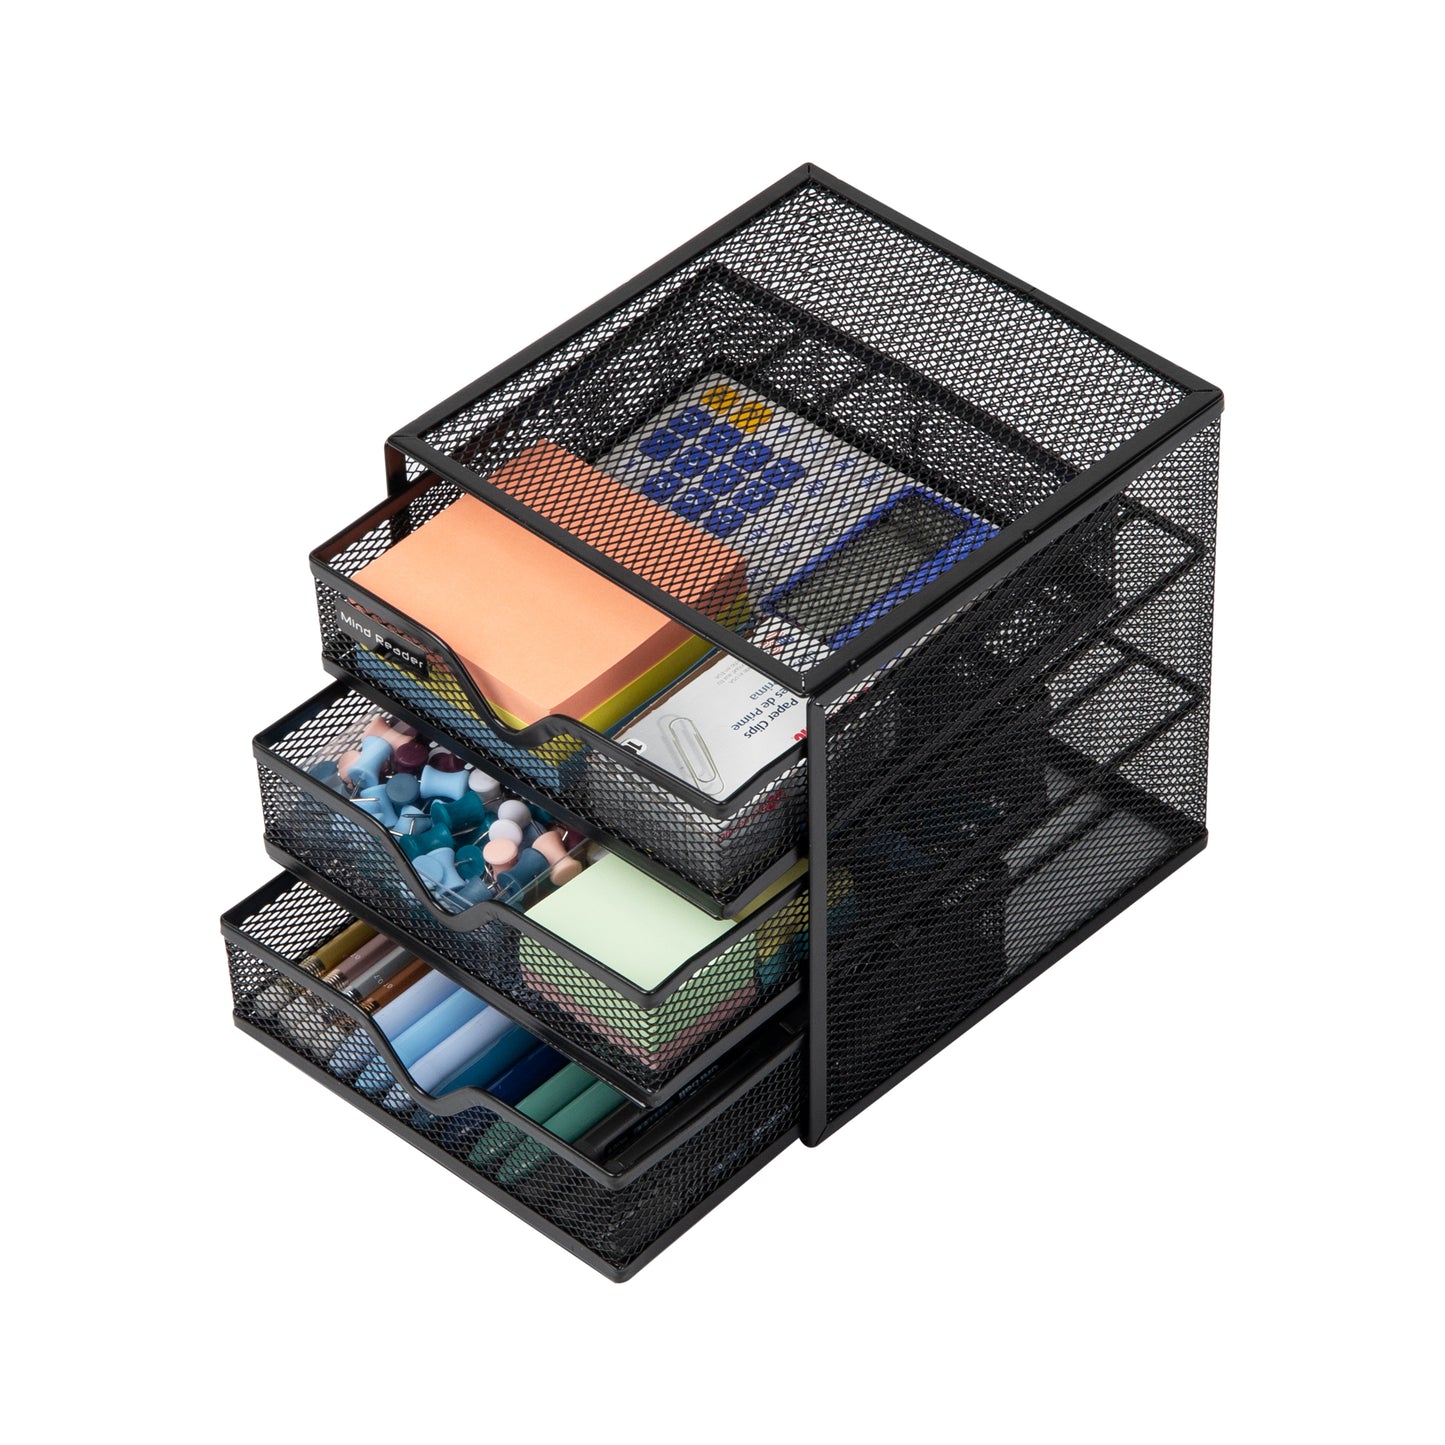 Mind Reader Network Collection, 3-Drawer Accessory Storage, Desk Supplies, Memo Holder, Paper/Binder Clip Basket, Desktop Organizer, Metal Mesh, Black